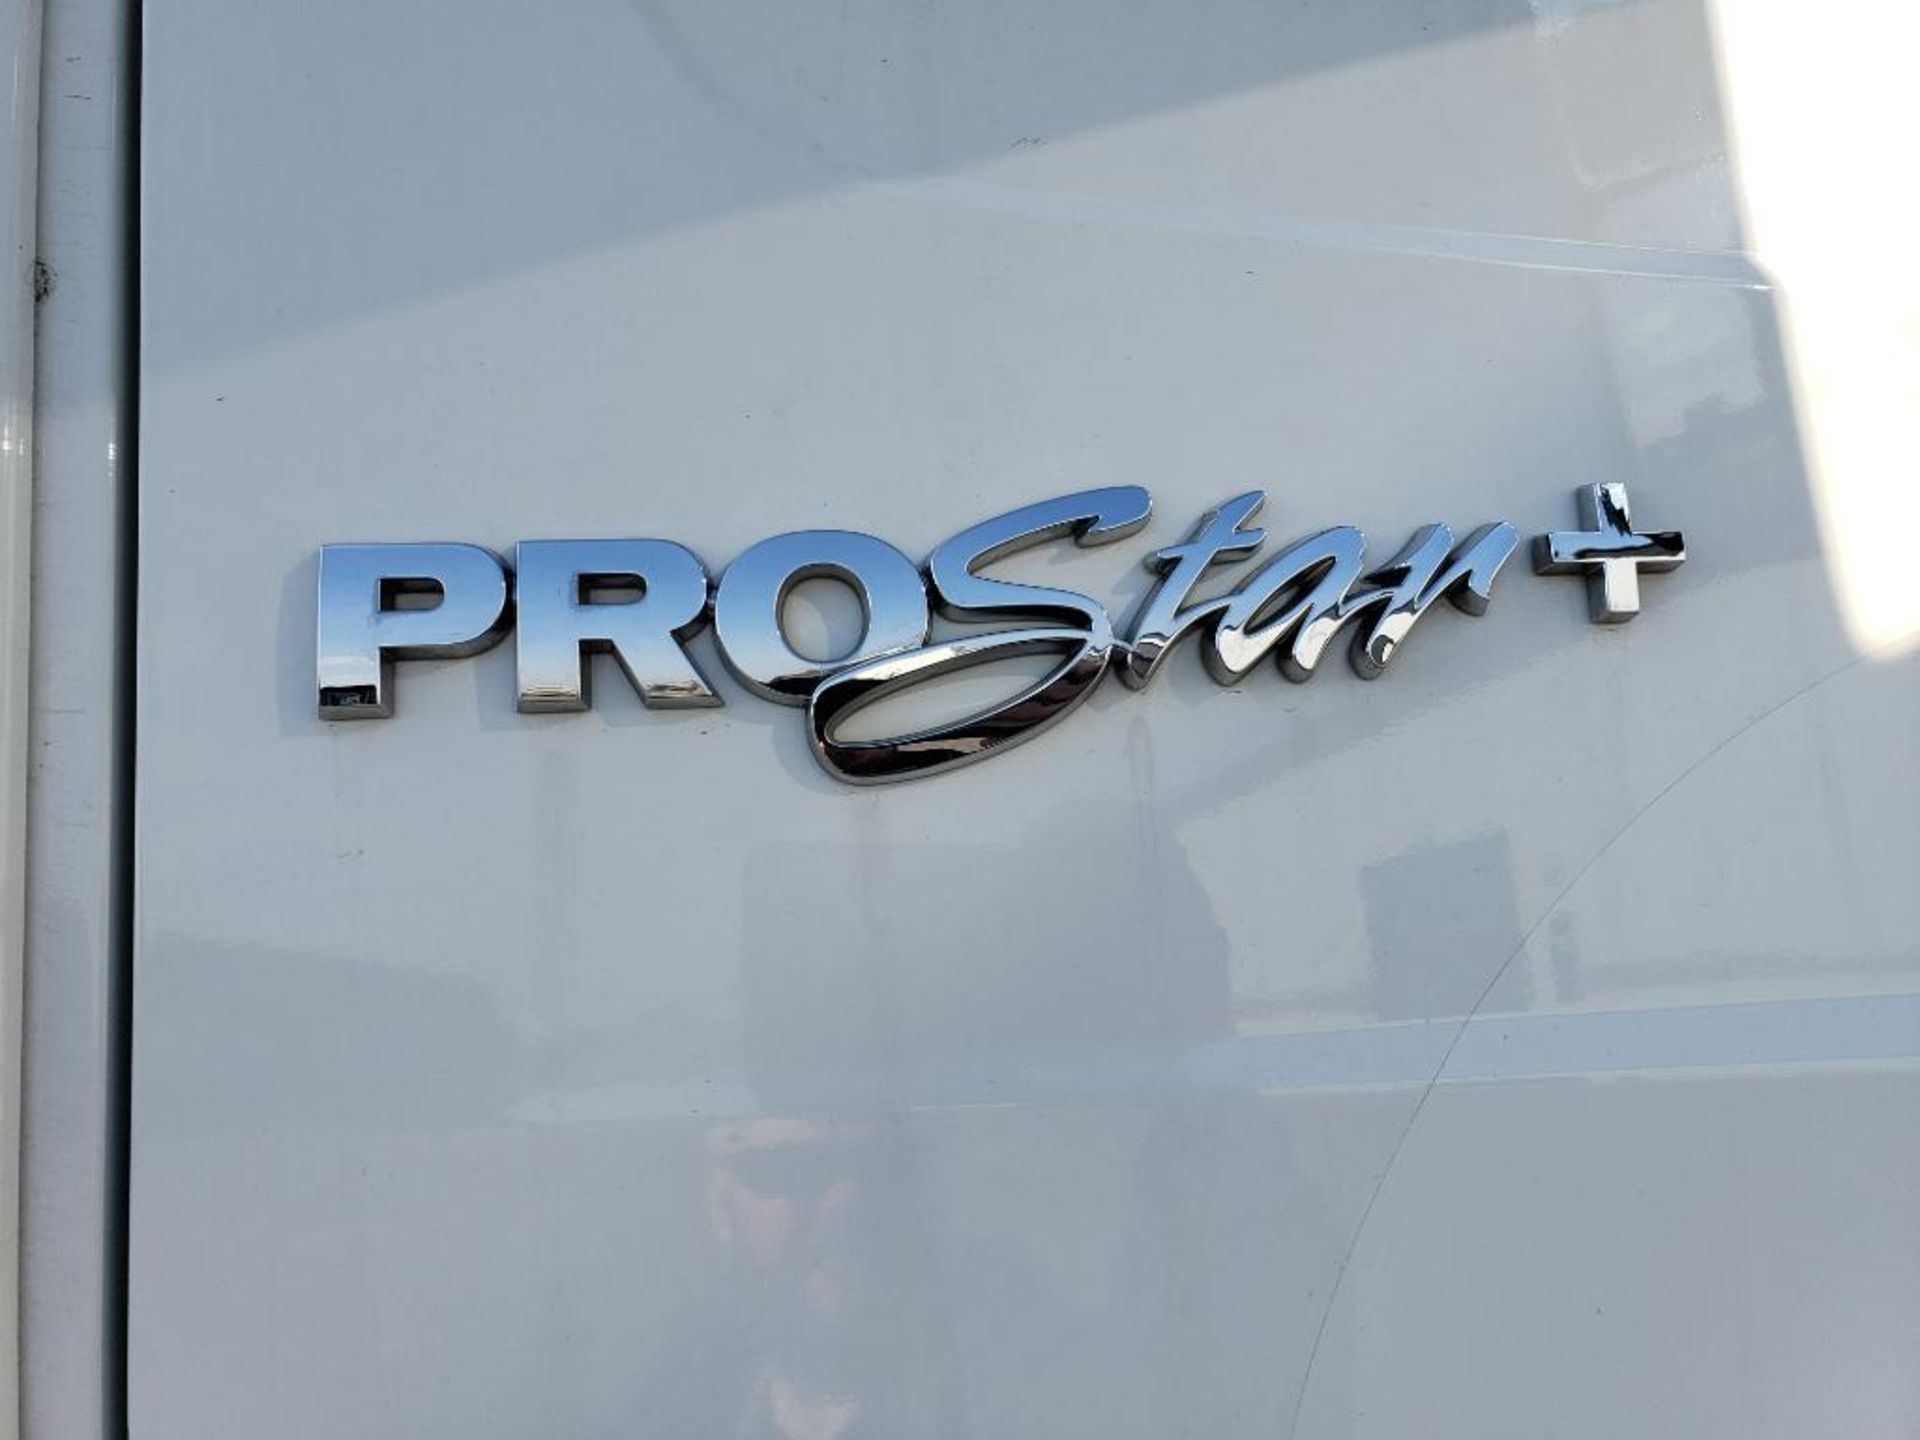 2015 International ProStar Truck, VIN # 3HSDJAPR7FN070742 - Image 10 of 54